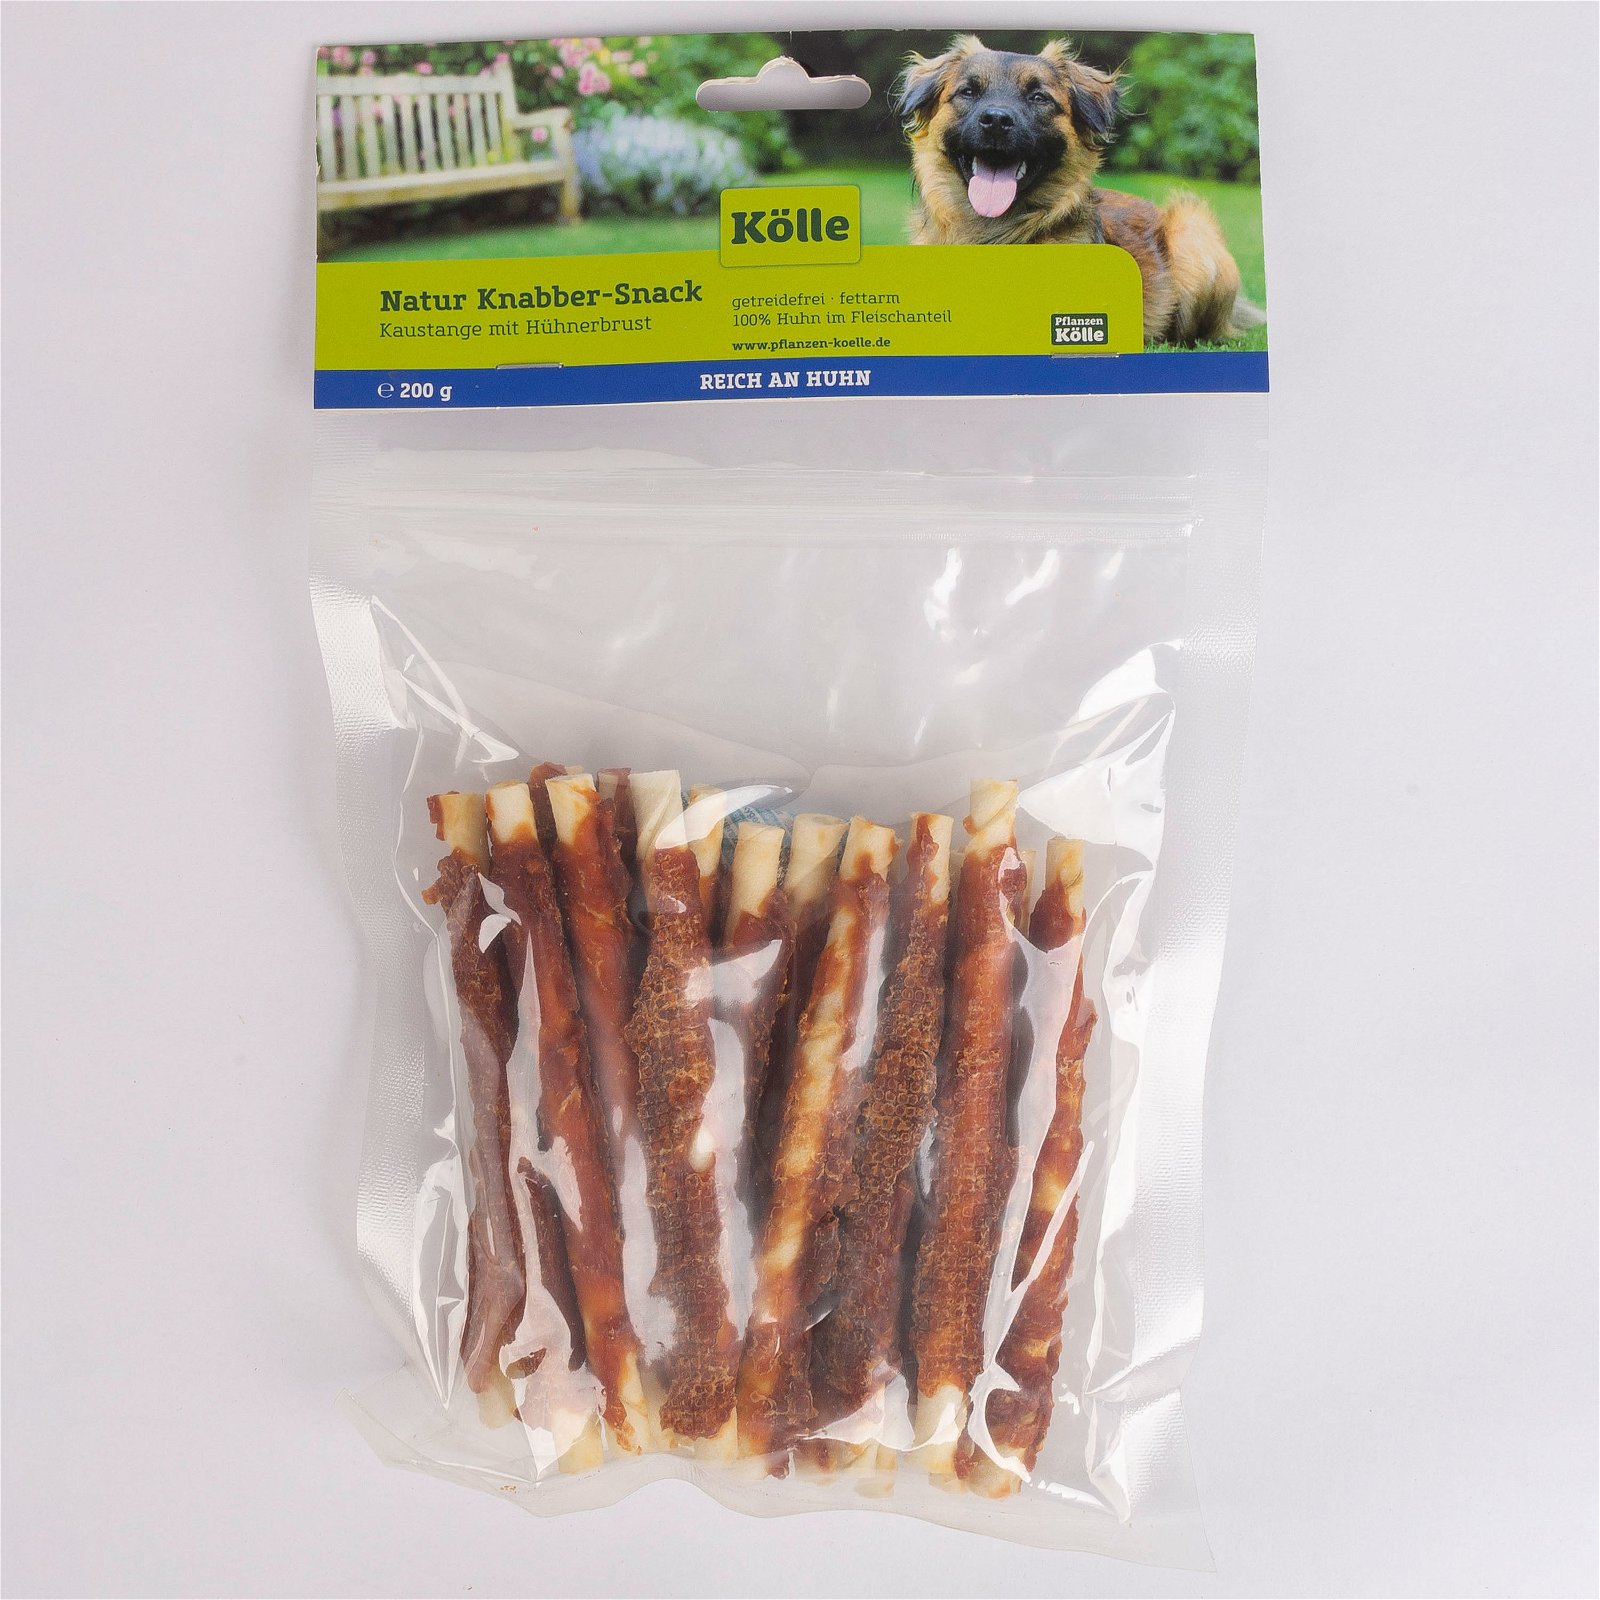 Natur Knabber-Snack für Hunde, Kaustange mit Hühnerbrust, 200 g